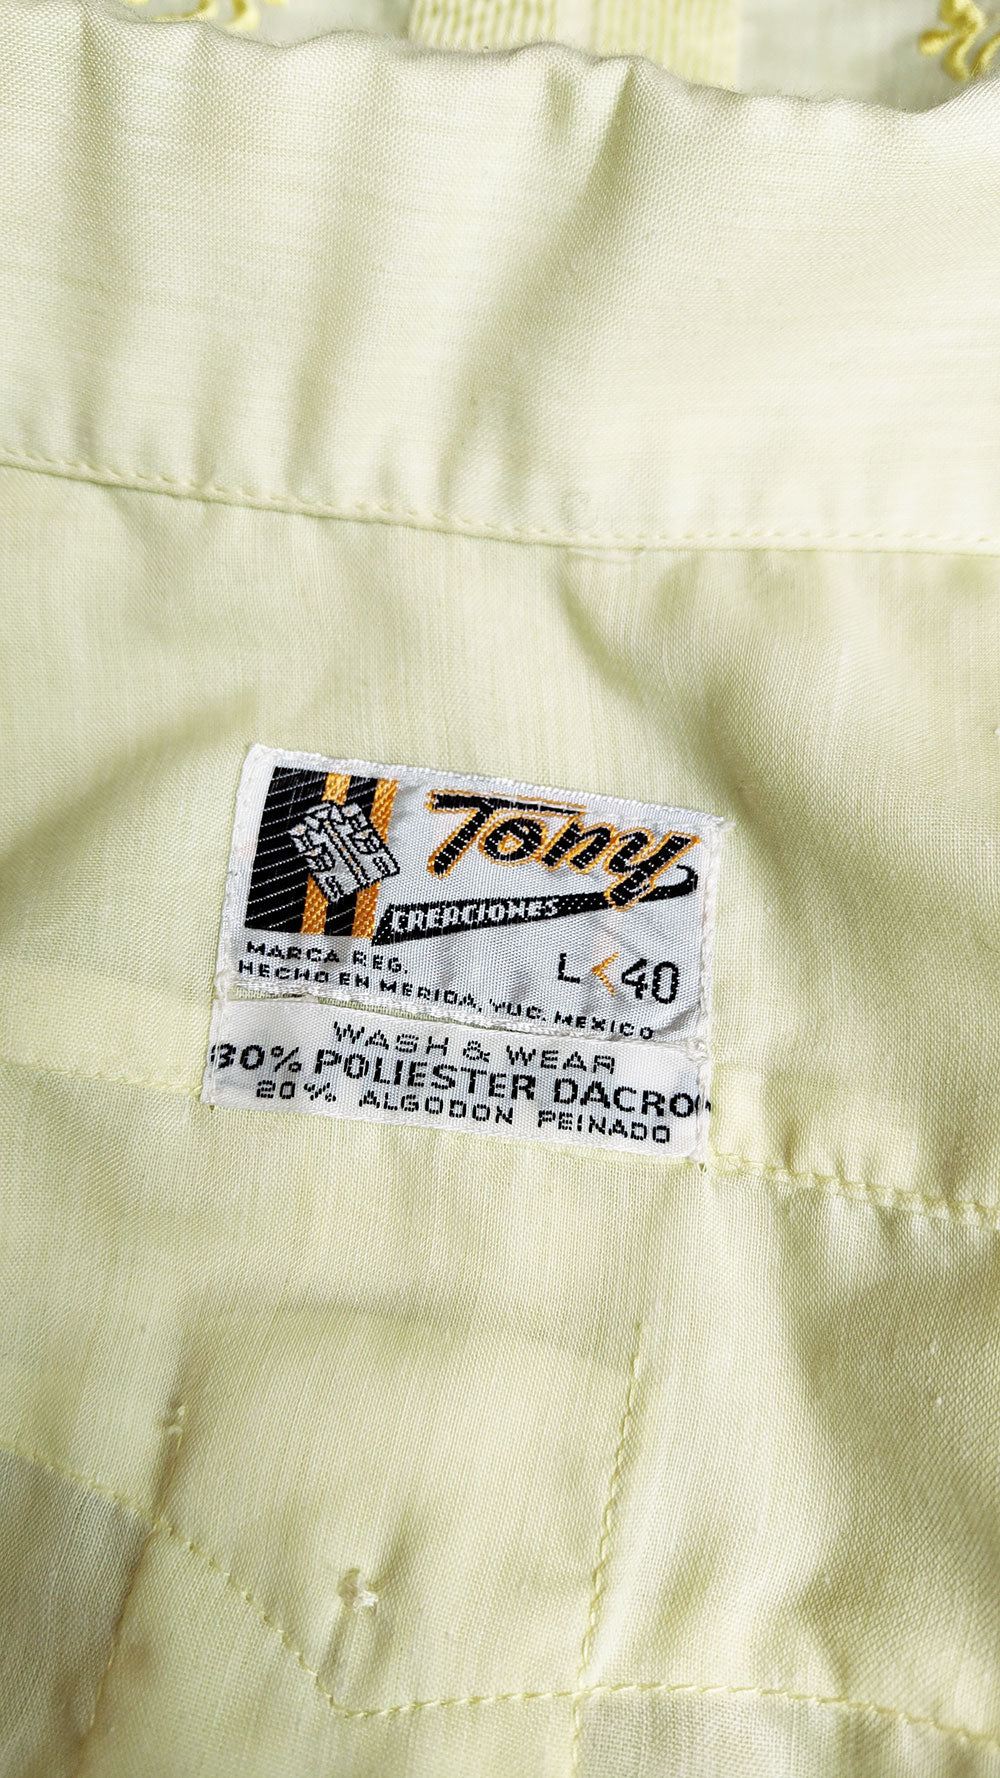 Tony Mens Vintage Sheer Pastel Yellow Mexican Shirt, 1970s